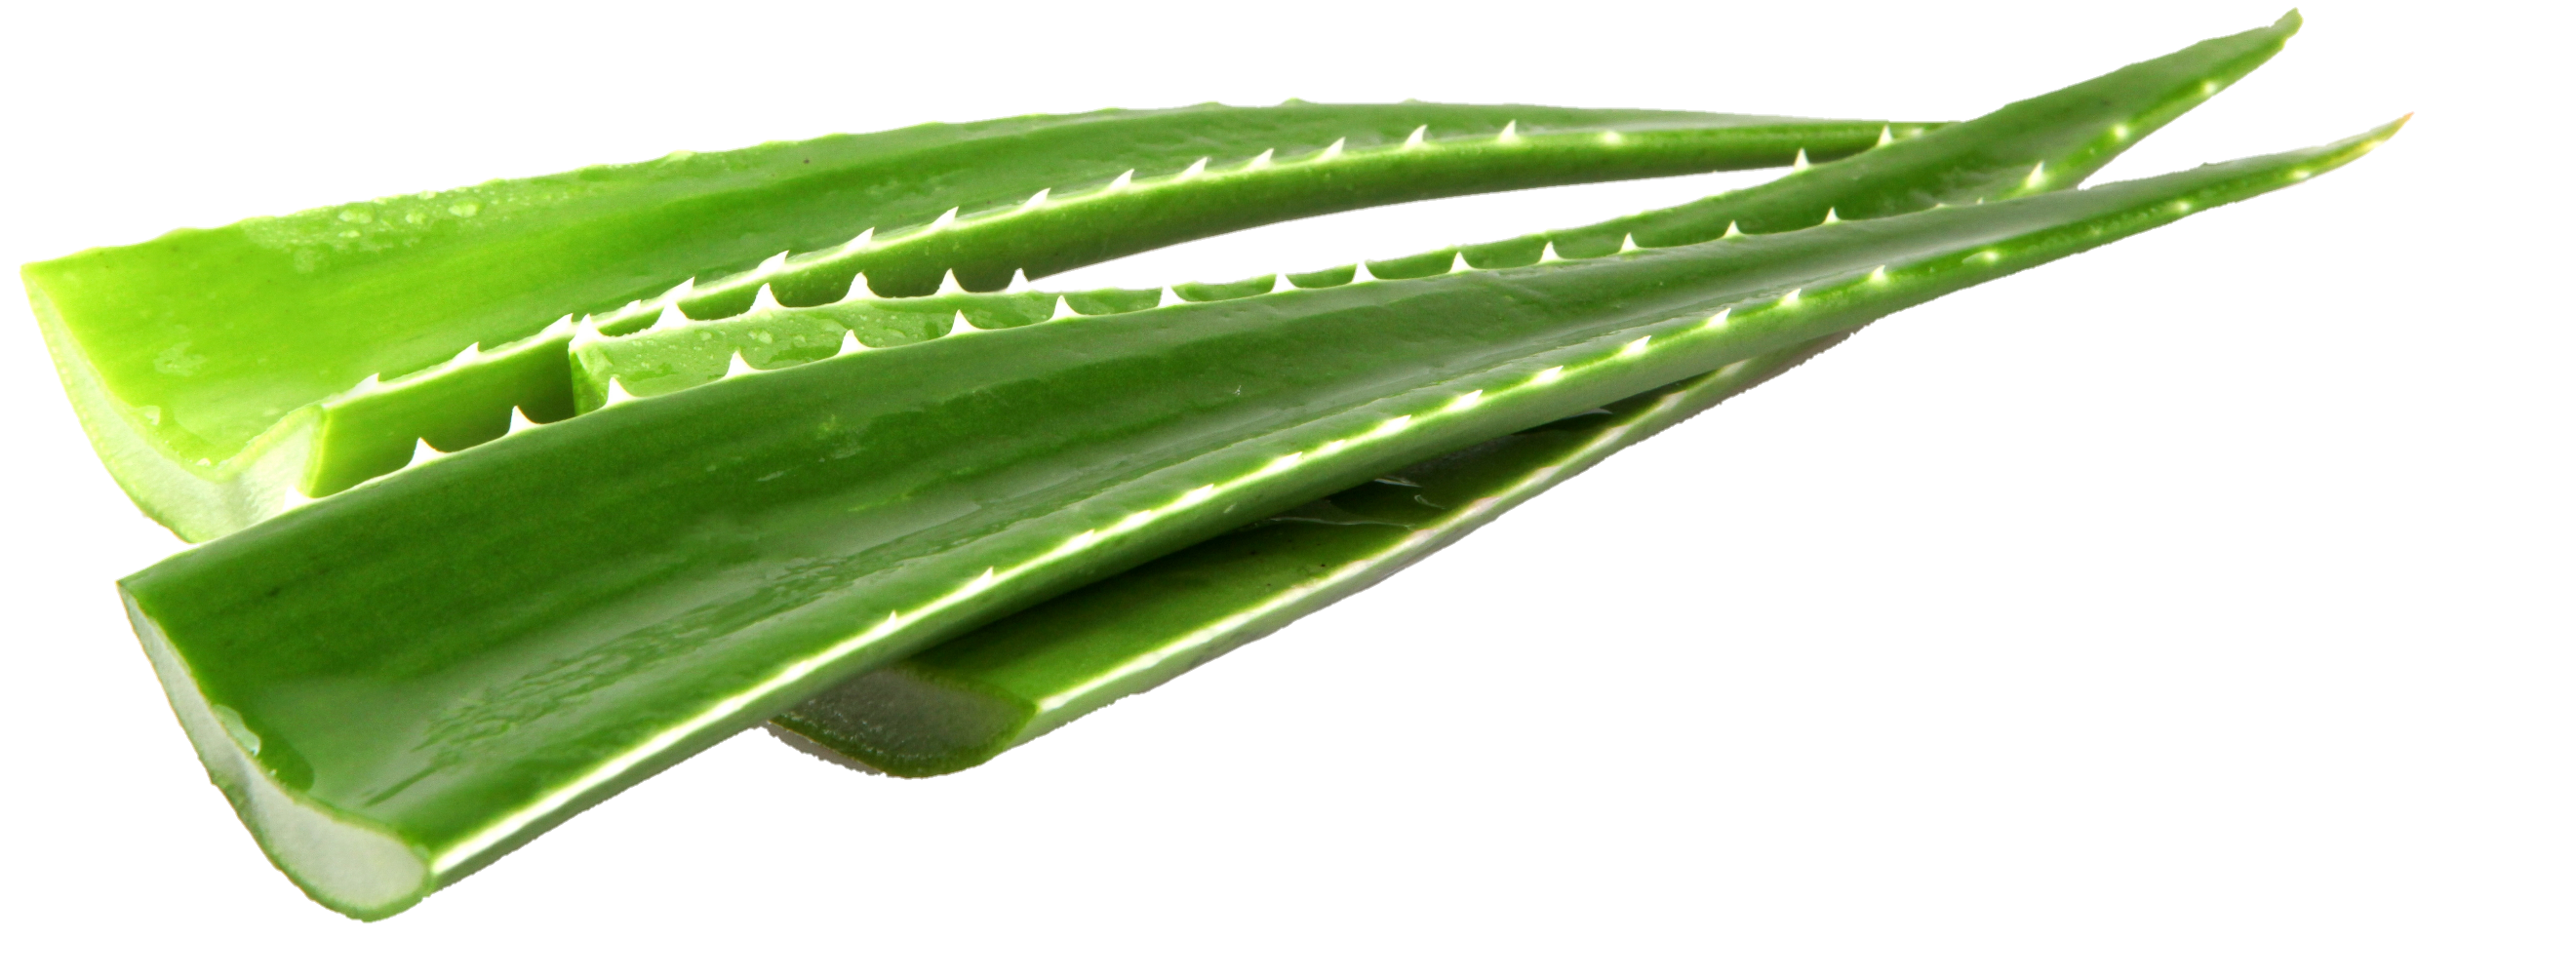 Aloe-vera-25-1